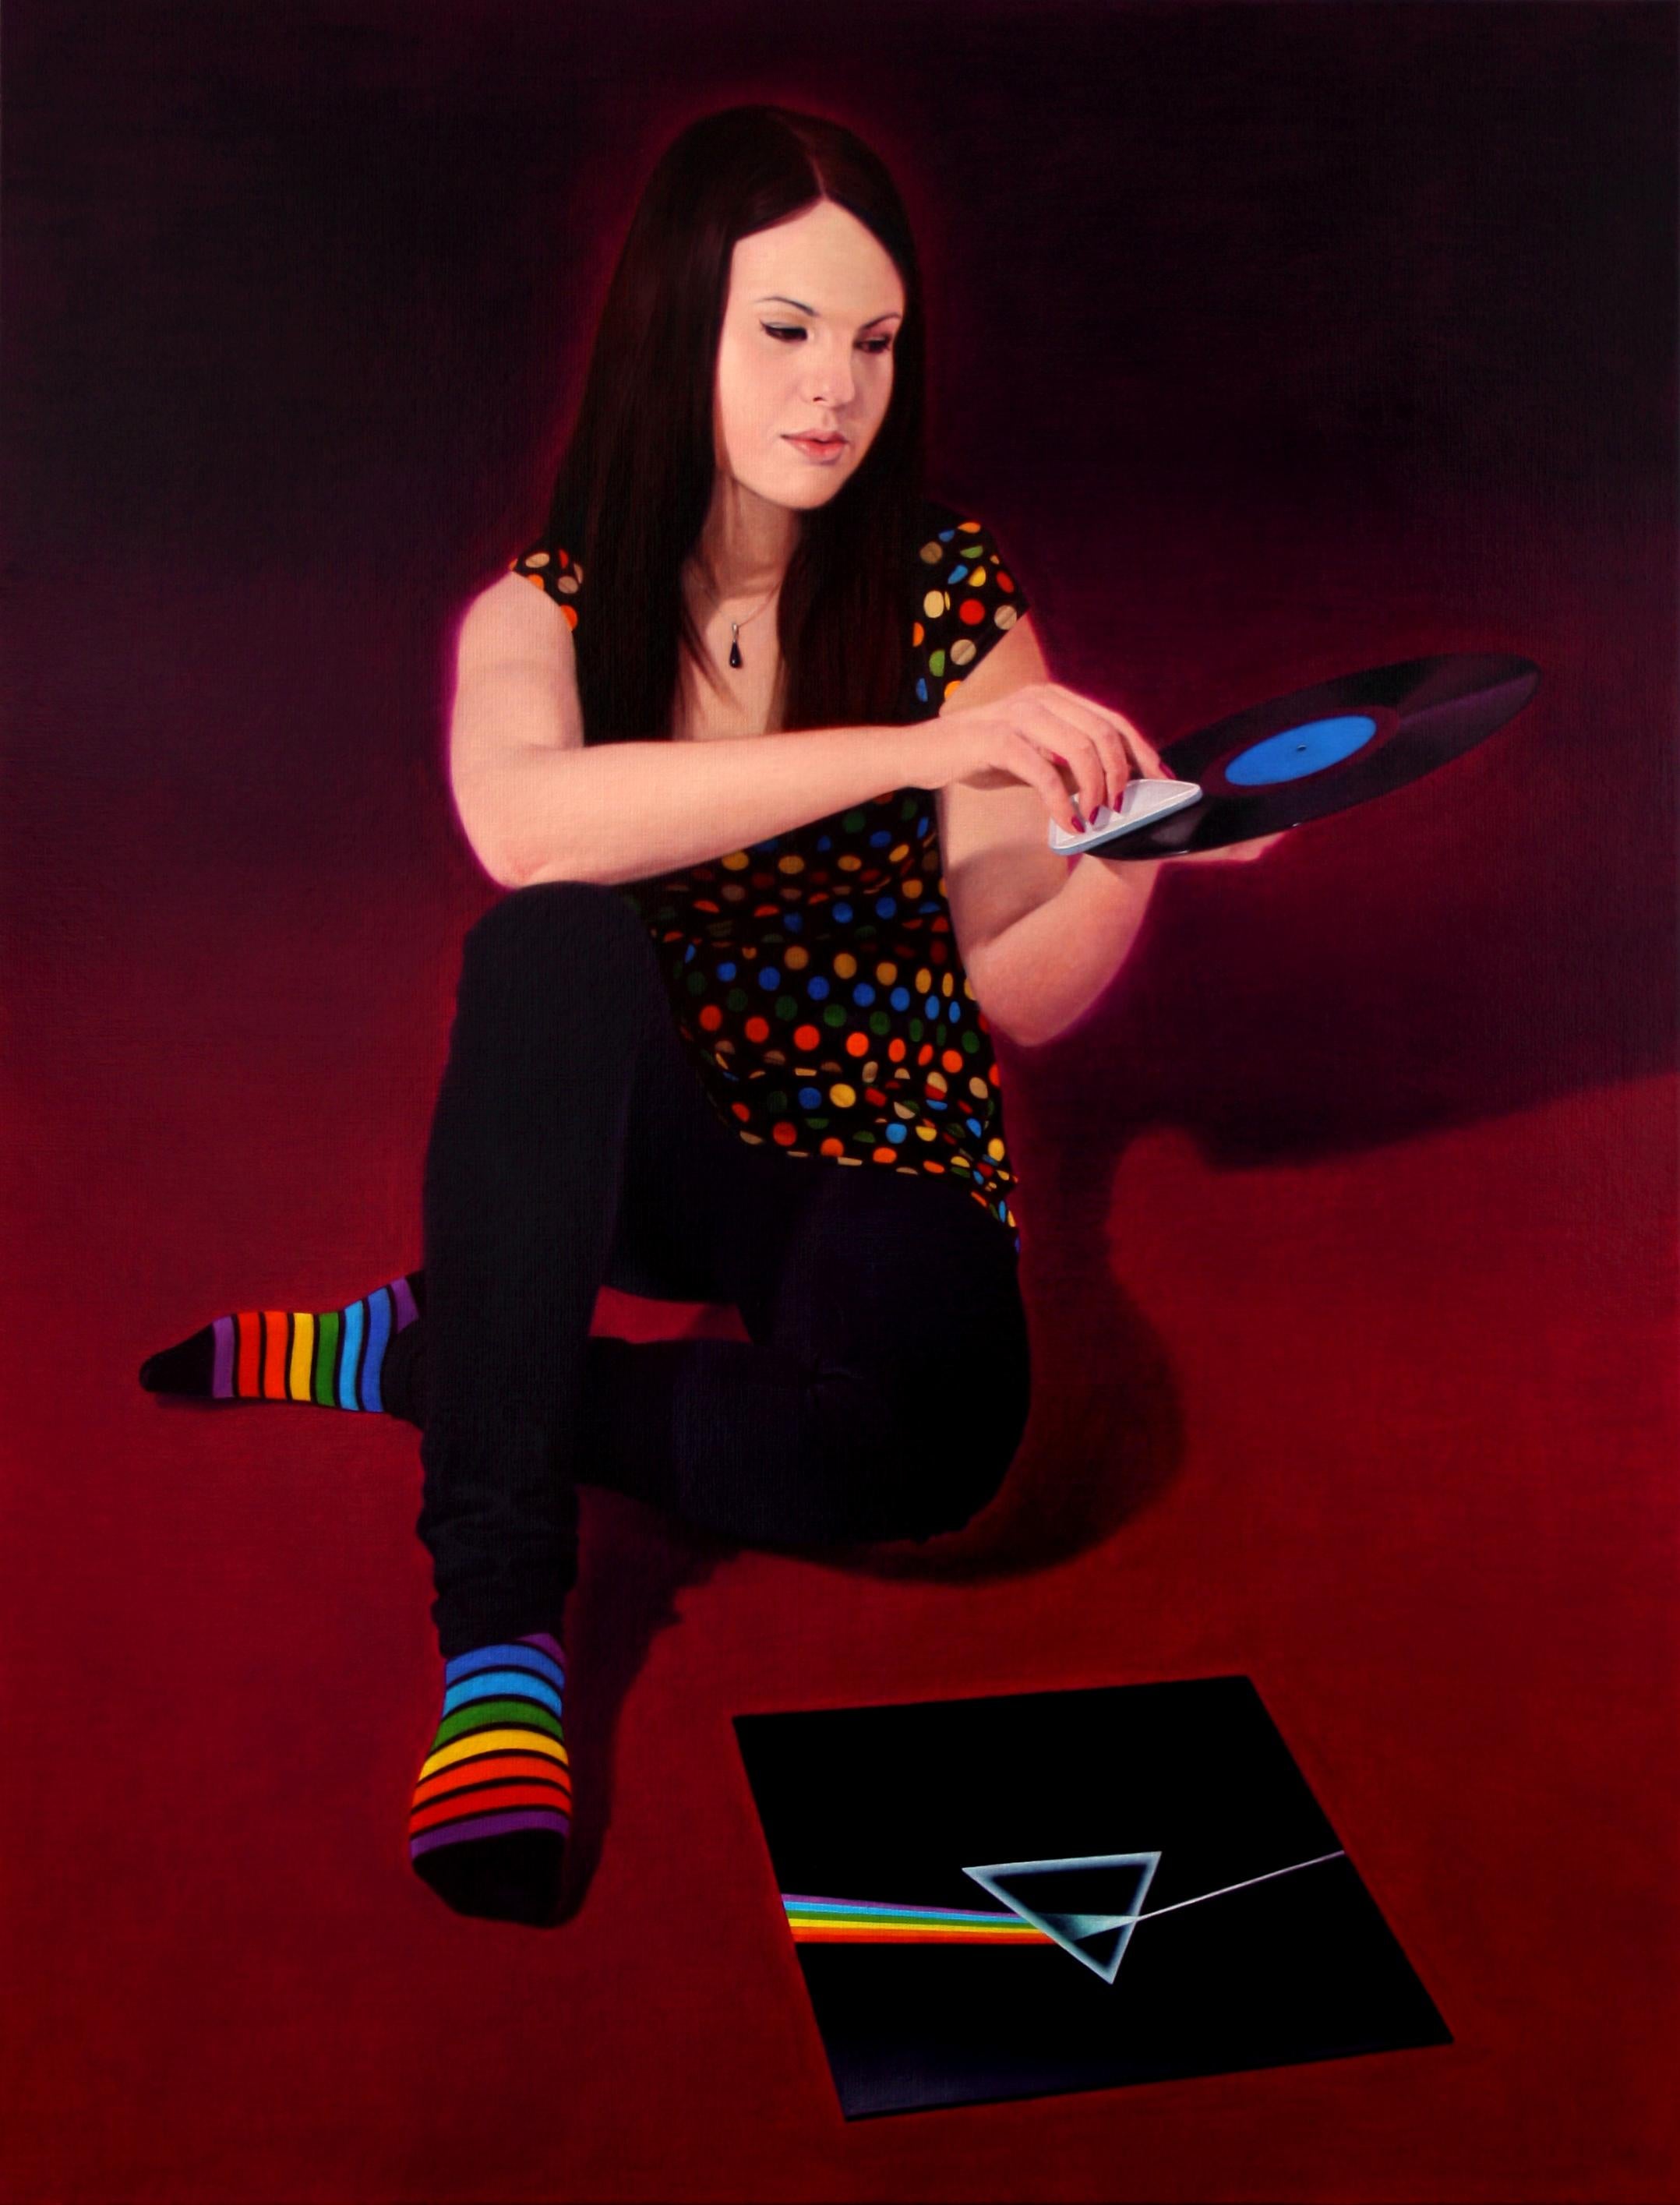 Vinyl - Contemporary Figurative Oil Painting, Realistic Girl Portrait